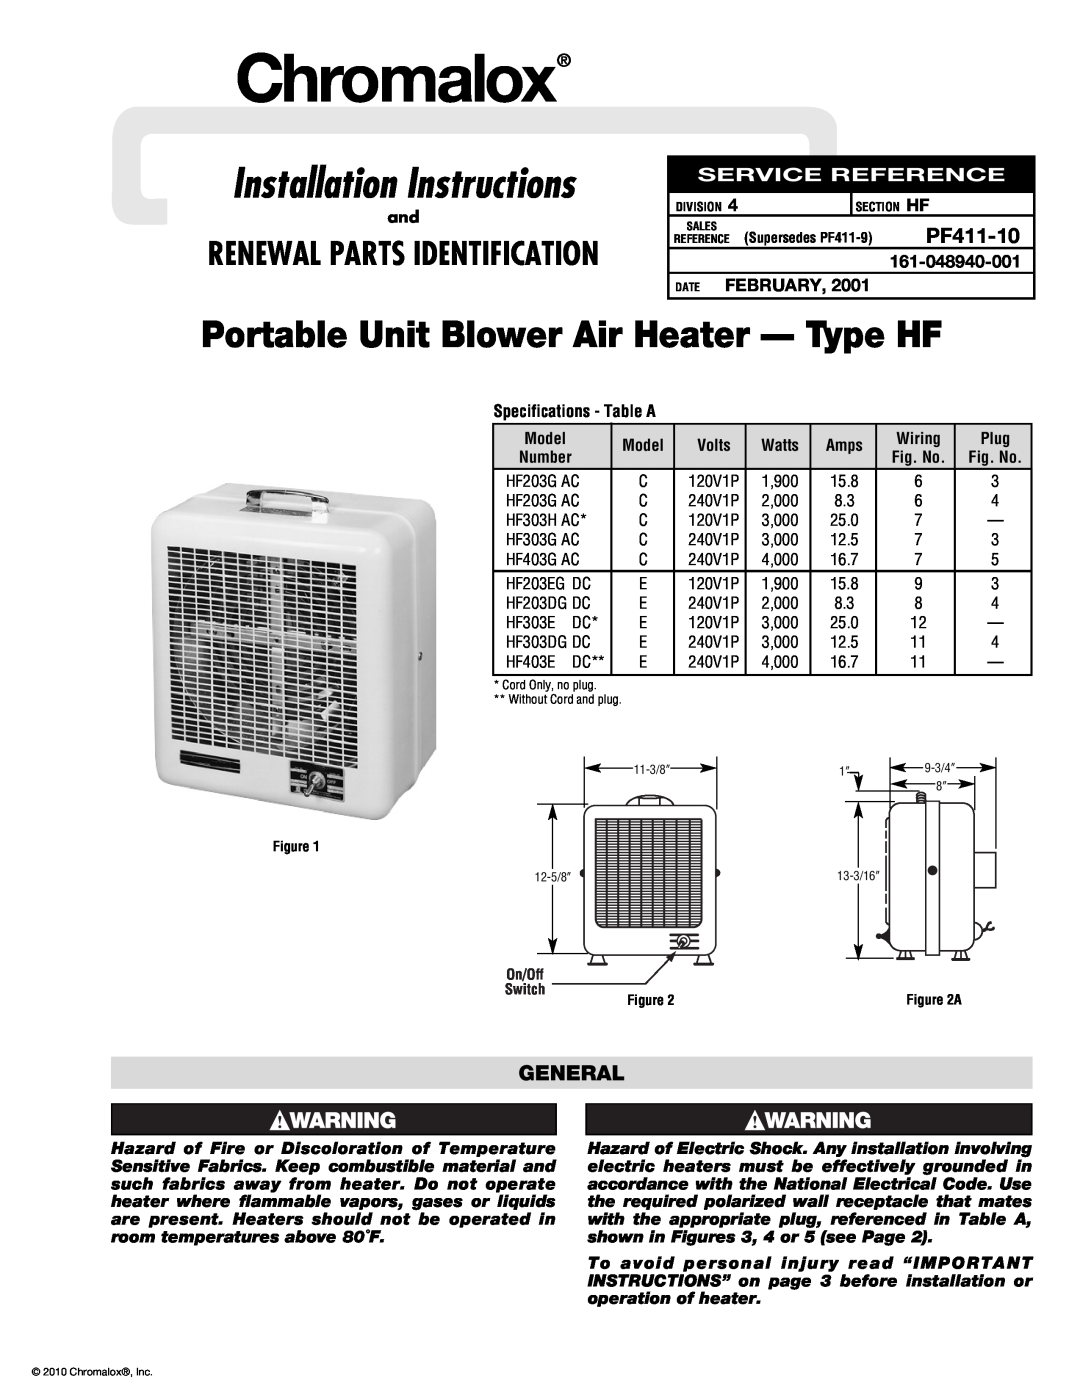 Chromalox PF411-10 installation instructions General, Specifications - Table A, Chromalox, Installation Instructions 